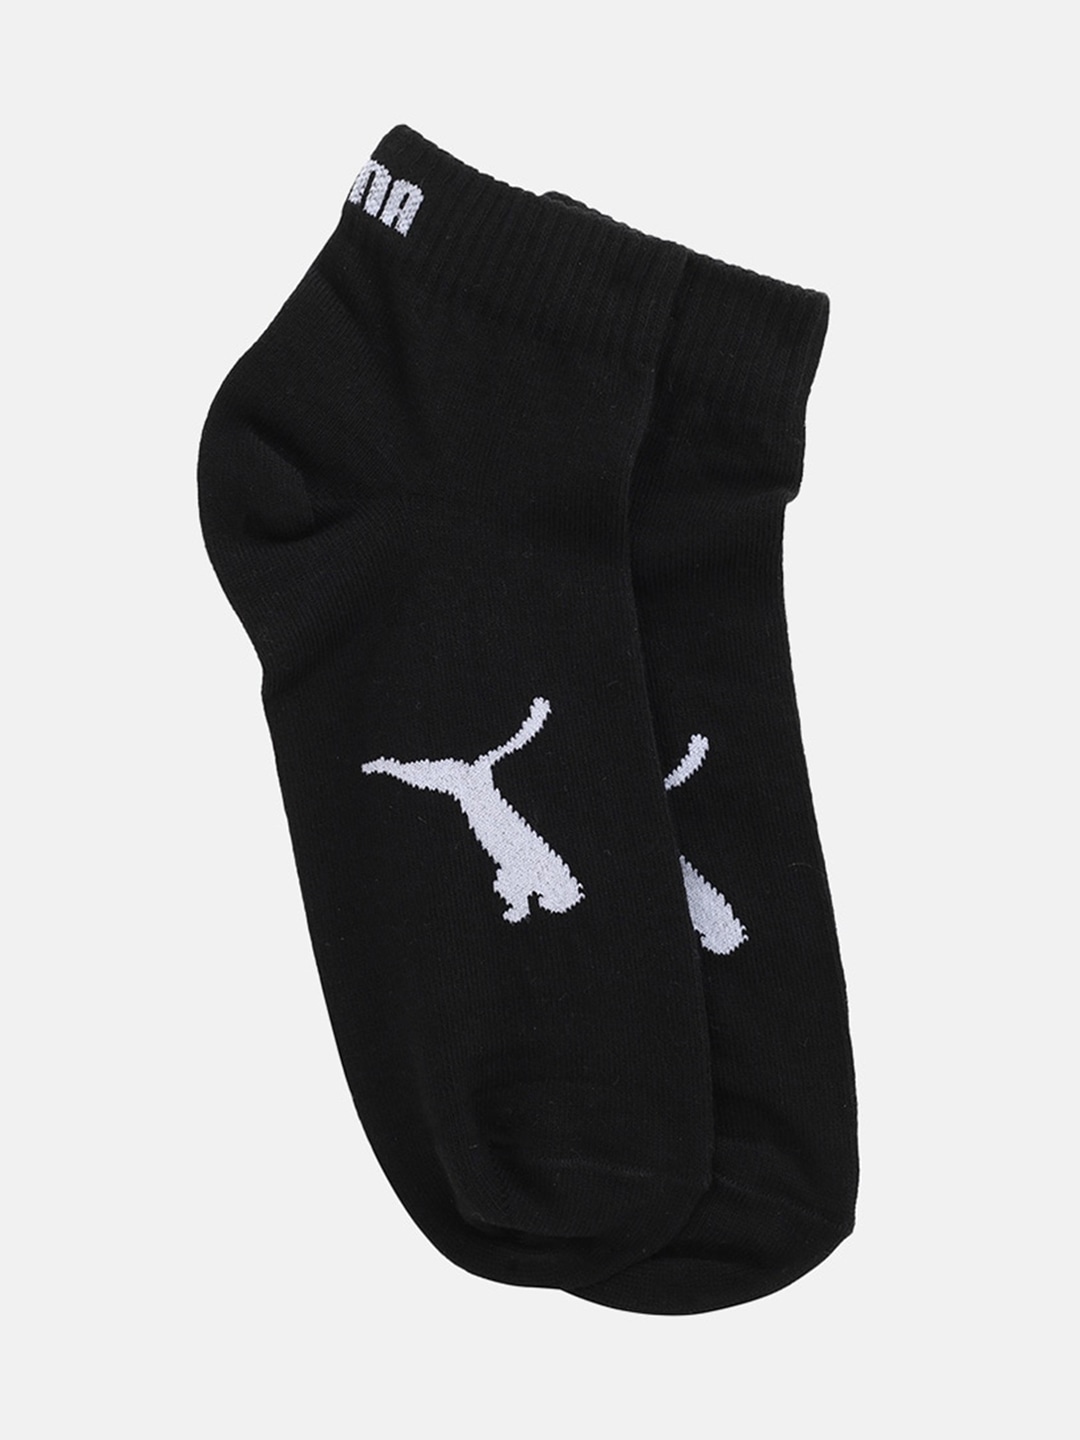 Accessories Socks | Puma Adults Black & White Brand Logo Patterned Ankle Length Socks - GI64132